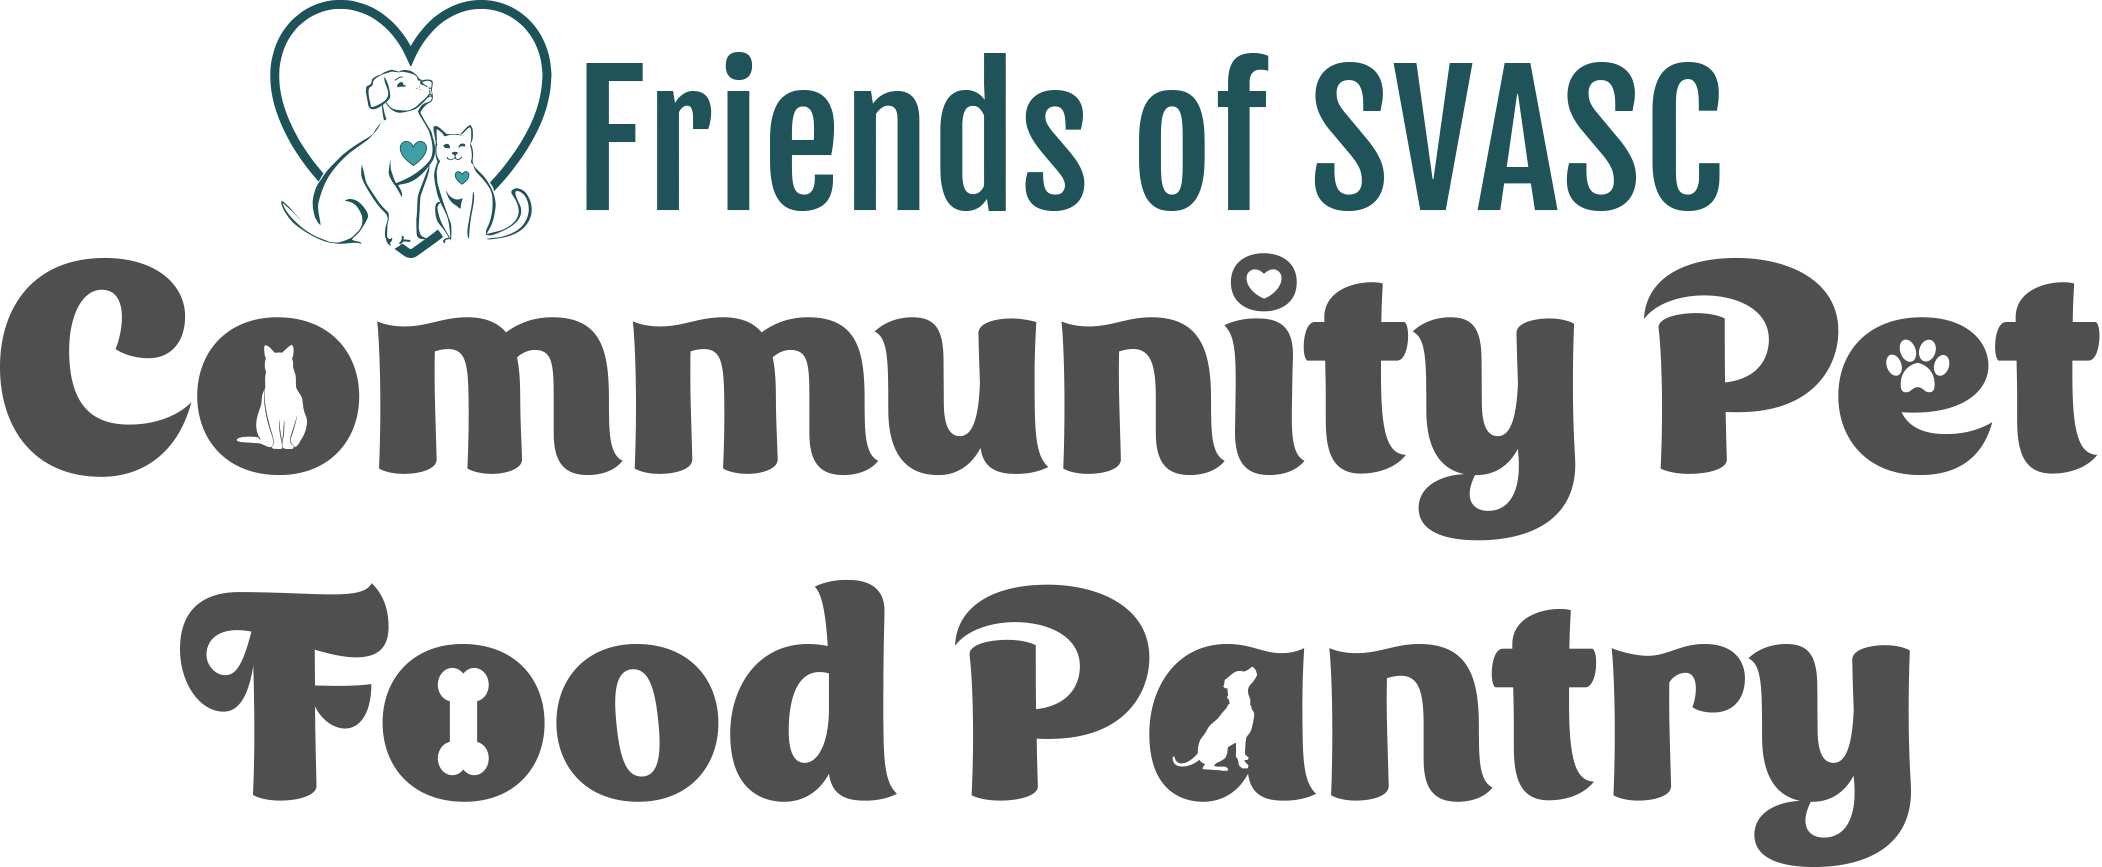 Community Pet Food Pantry Logo